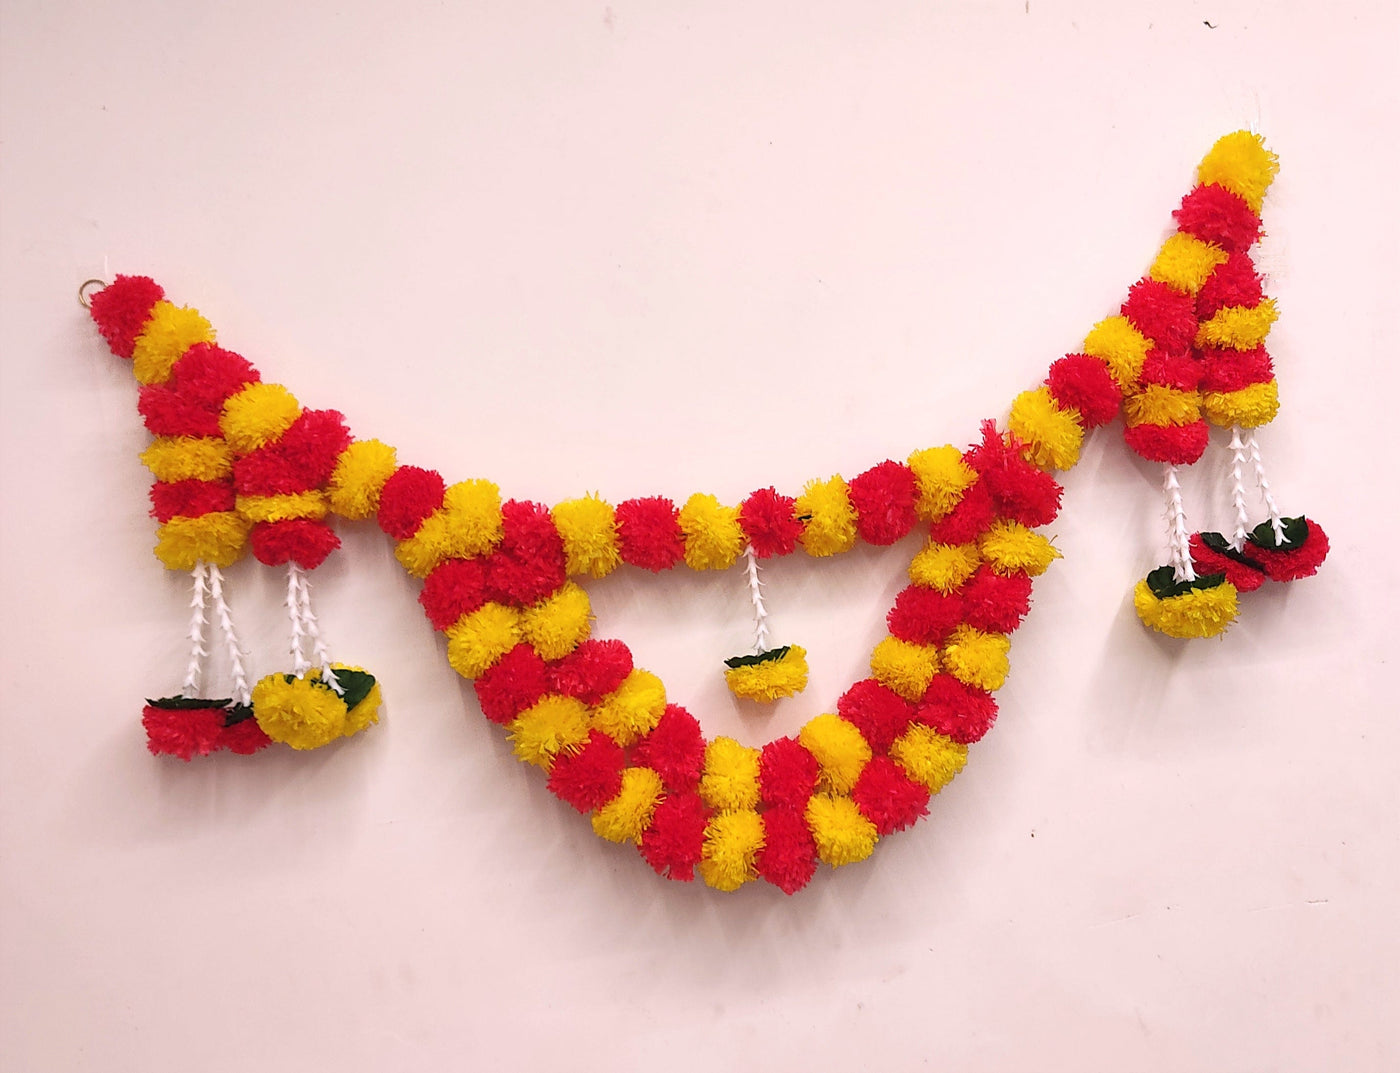 LAMANSH ® marigold hangings LAMANSH® Marigold Flower Full Door Decoration | Decoration Items for Home, Main Door, Mandir,Event,Party| Toran for Entrance Door, Torans for Entrance Door,Bandharwal toran for Home Door